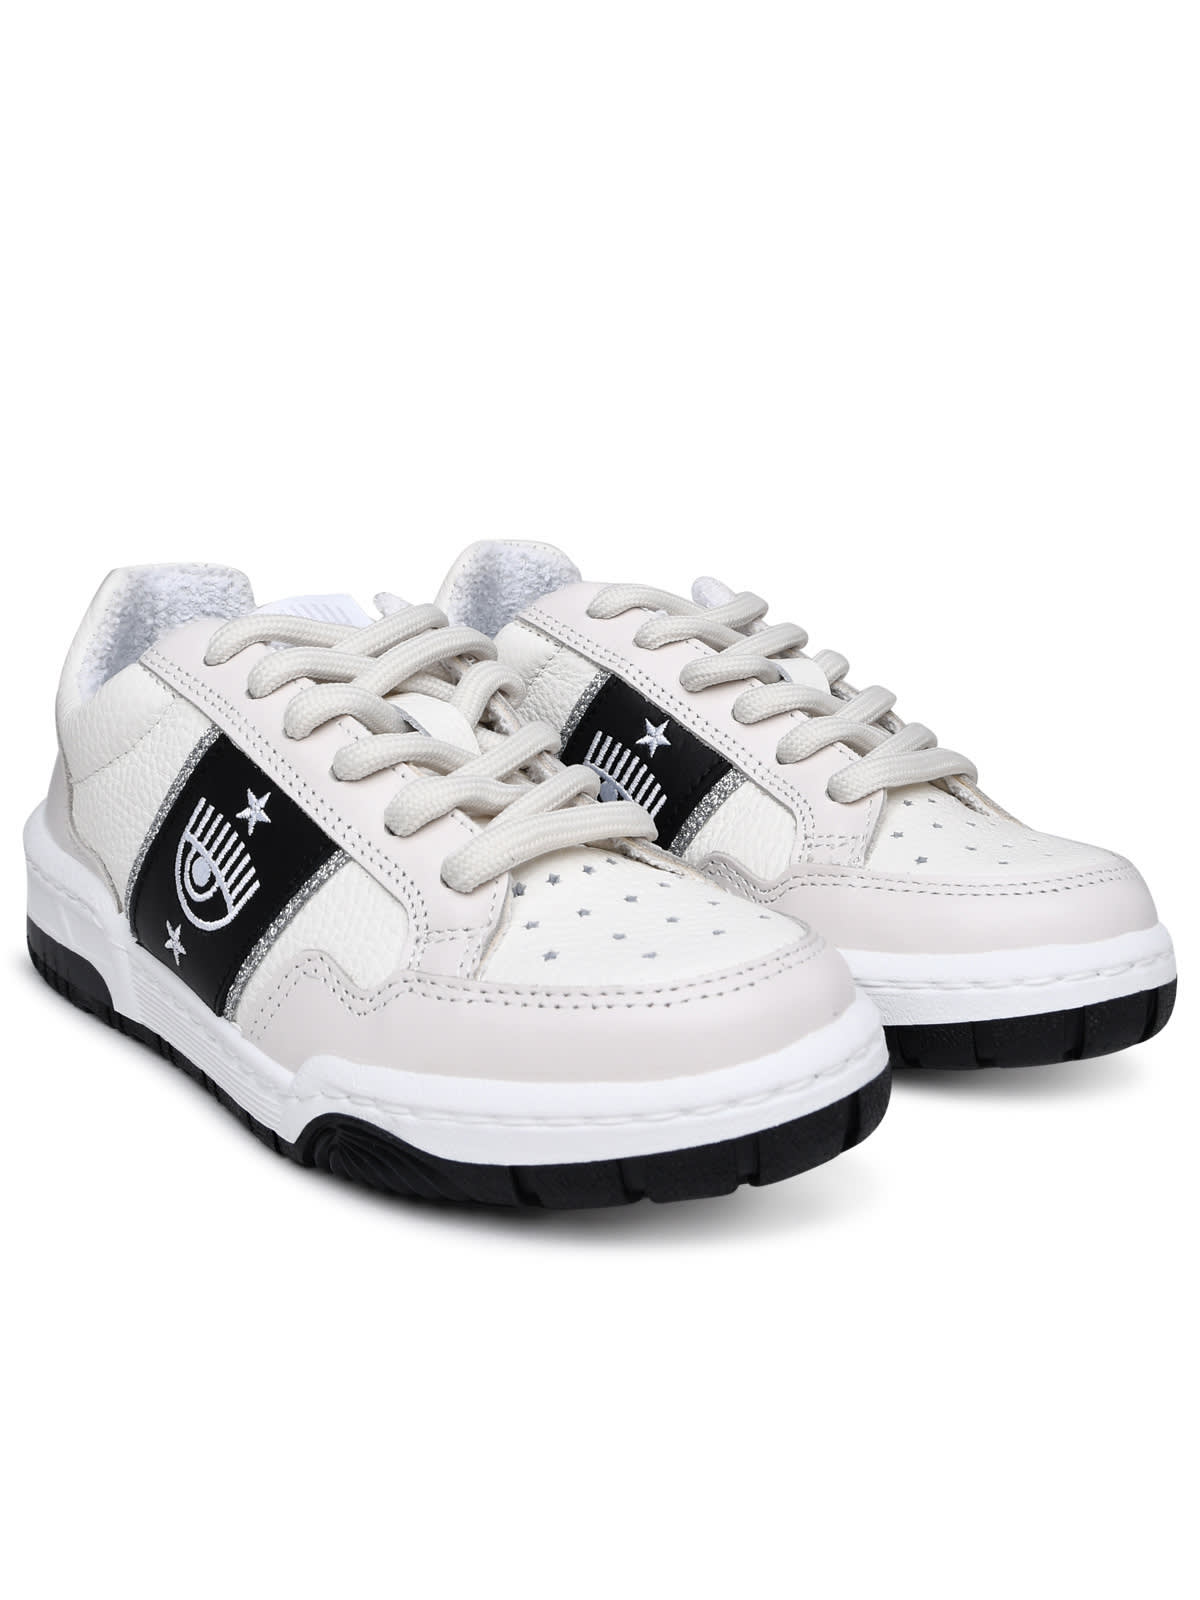 Shop Chiara Ferragni Cf1 White Leather Sneakers